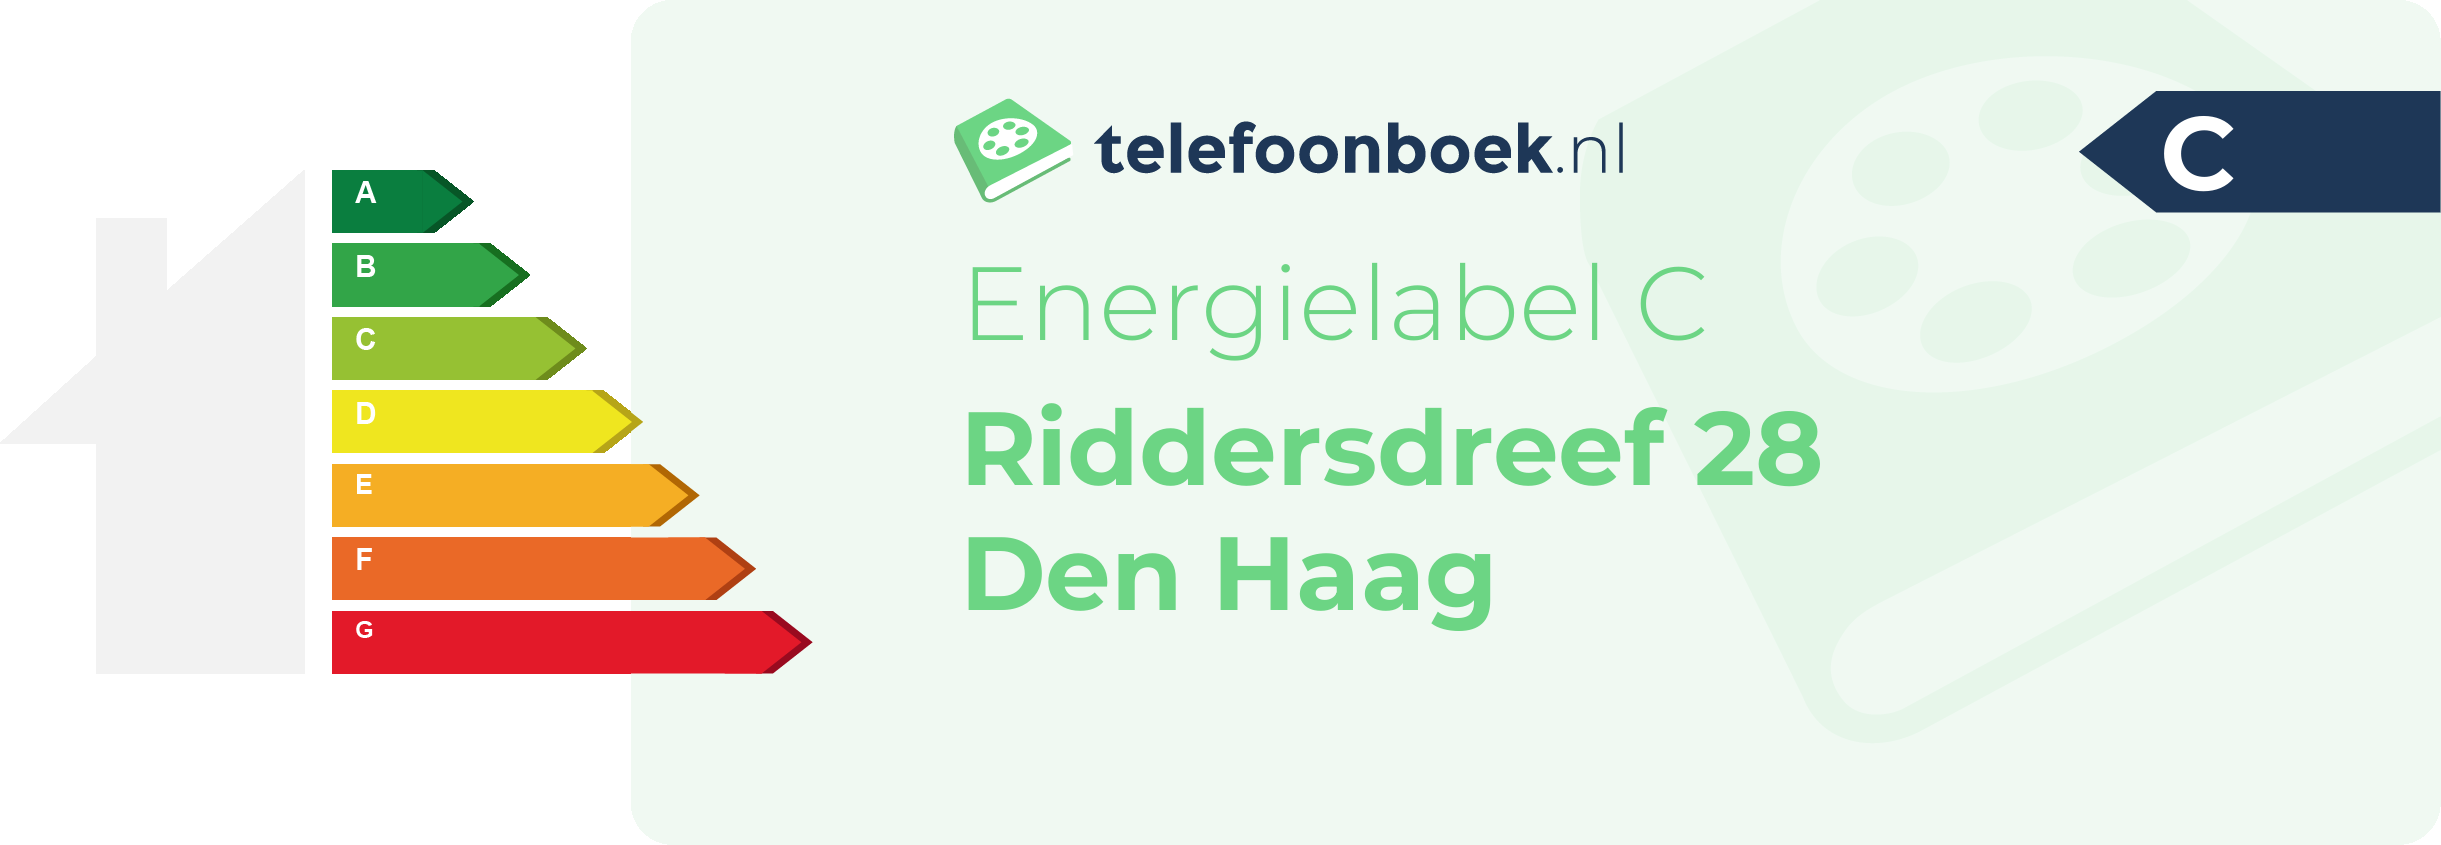 Energielabel Riddersdreef 28 Den Haag